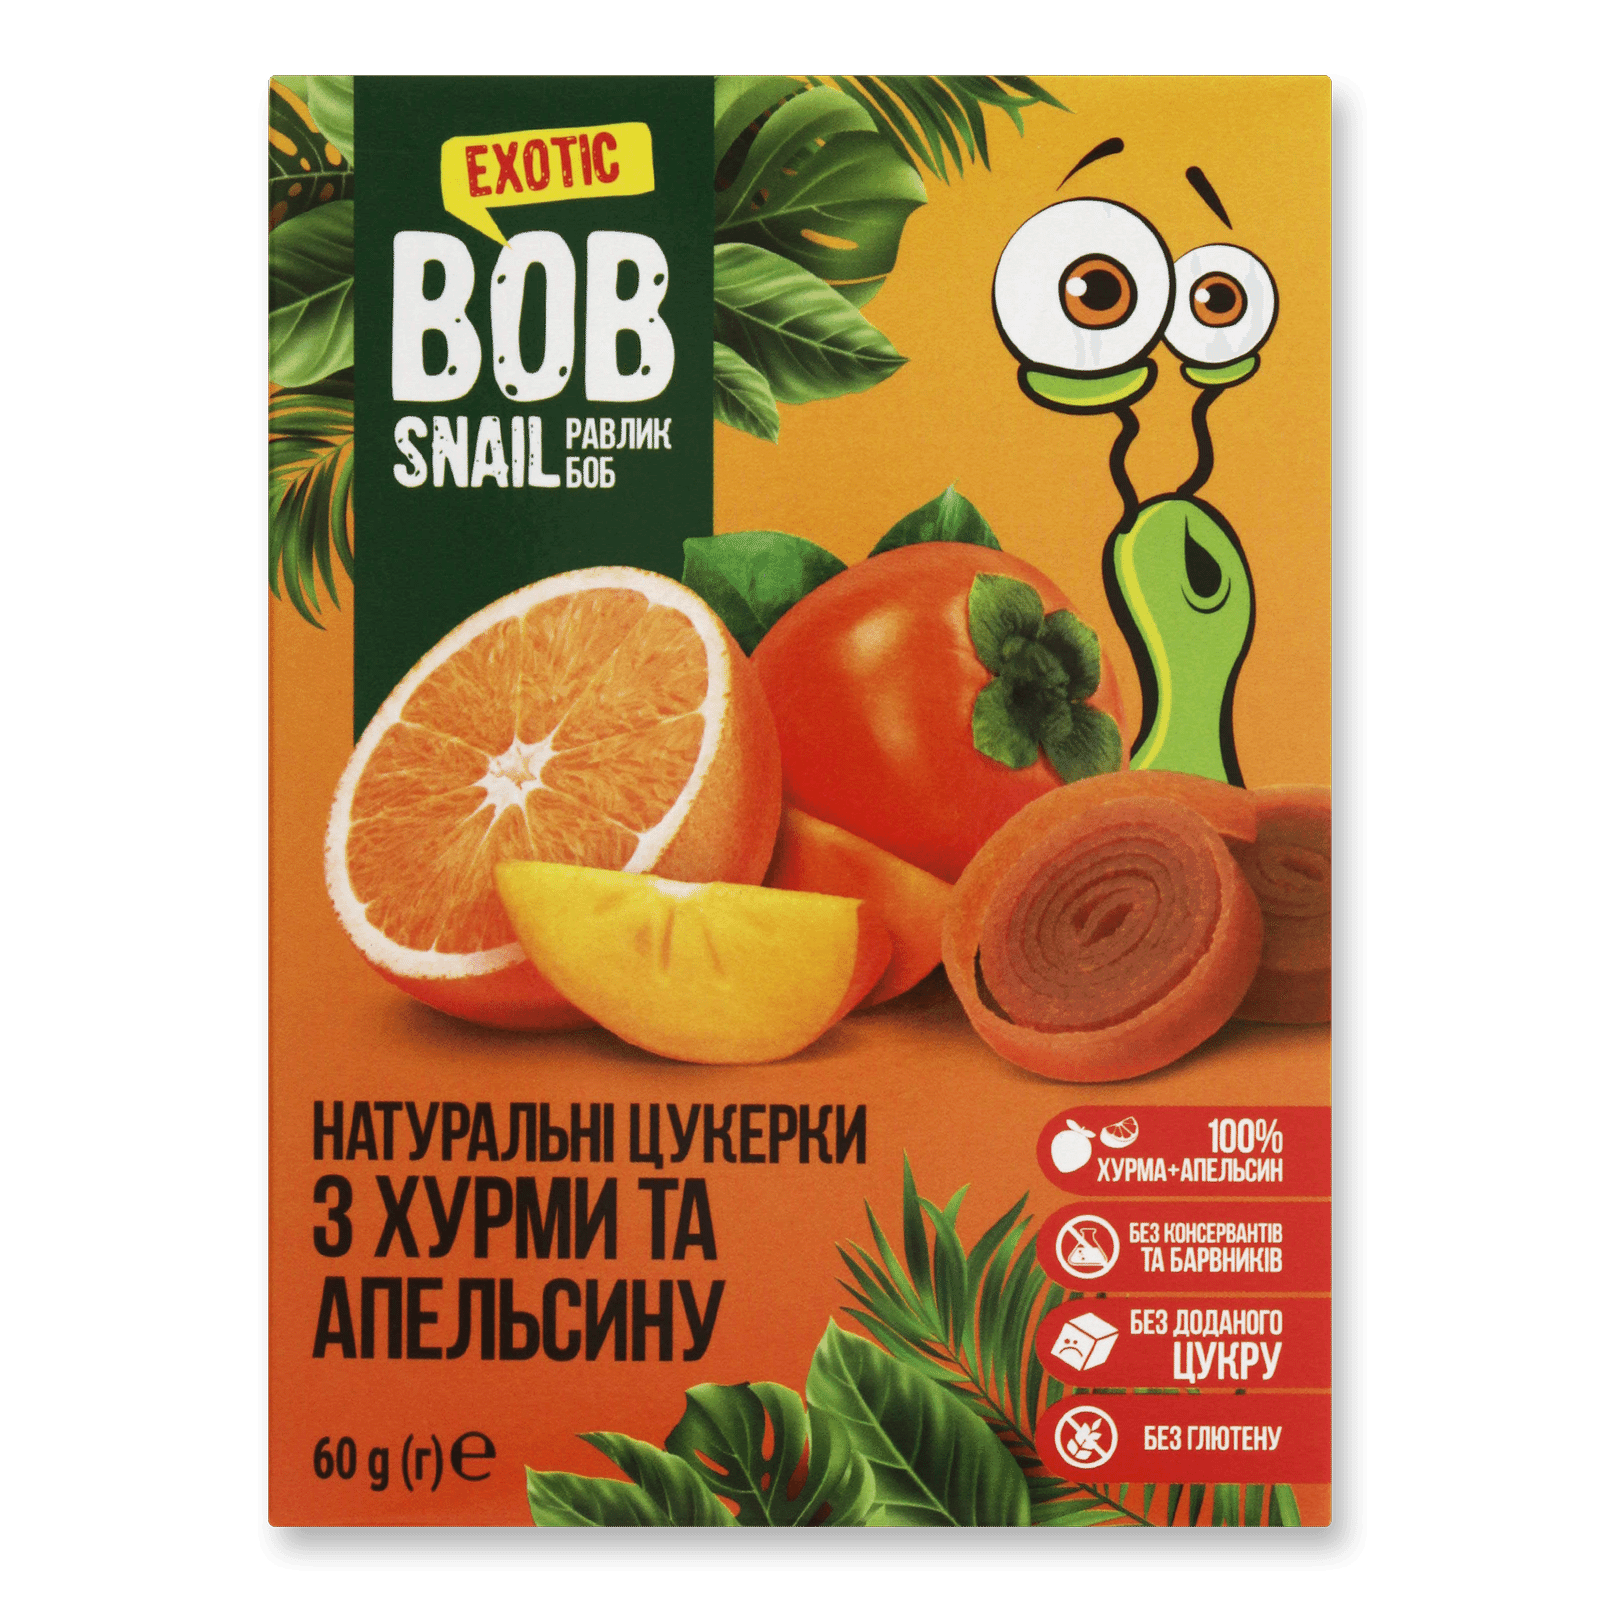 Цукерки Bob Snail хурма-апельсин - 1